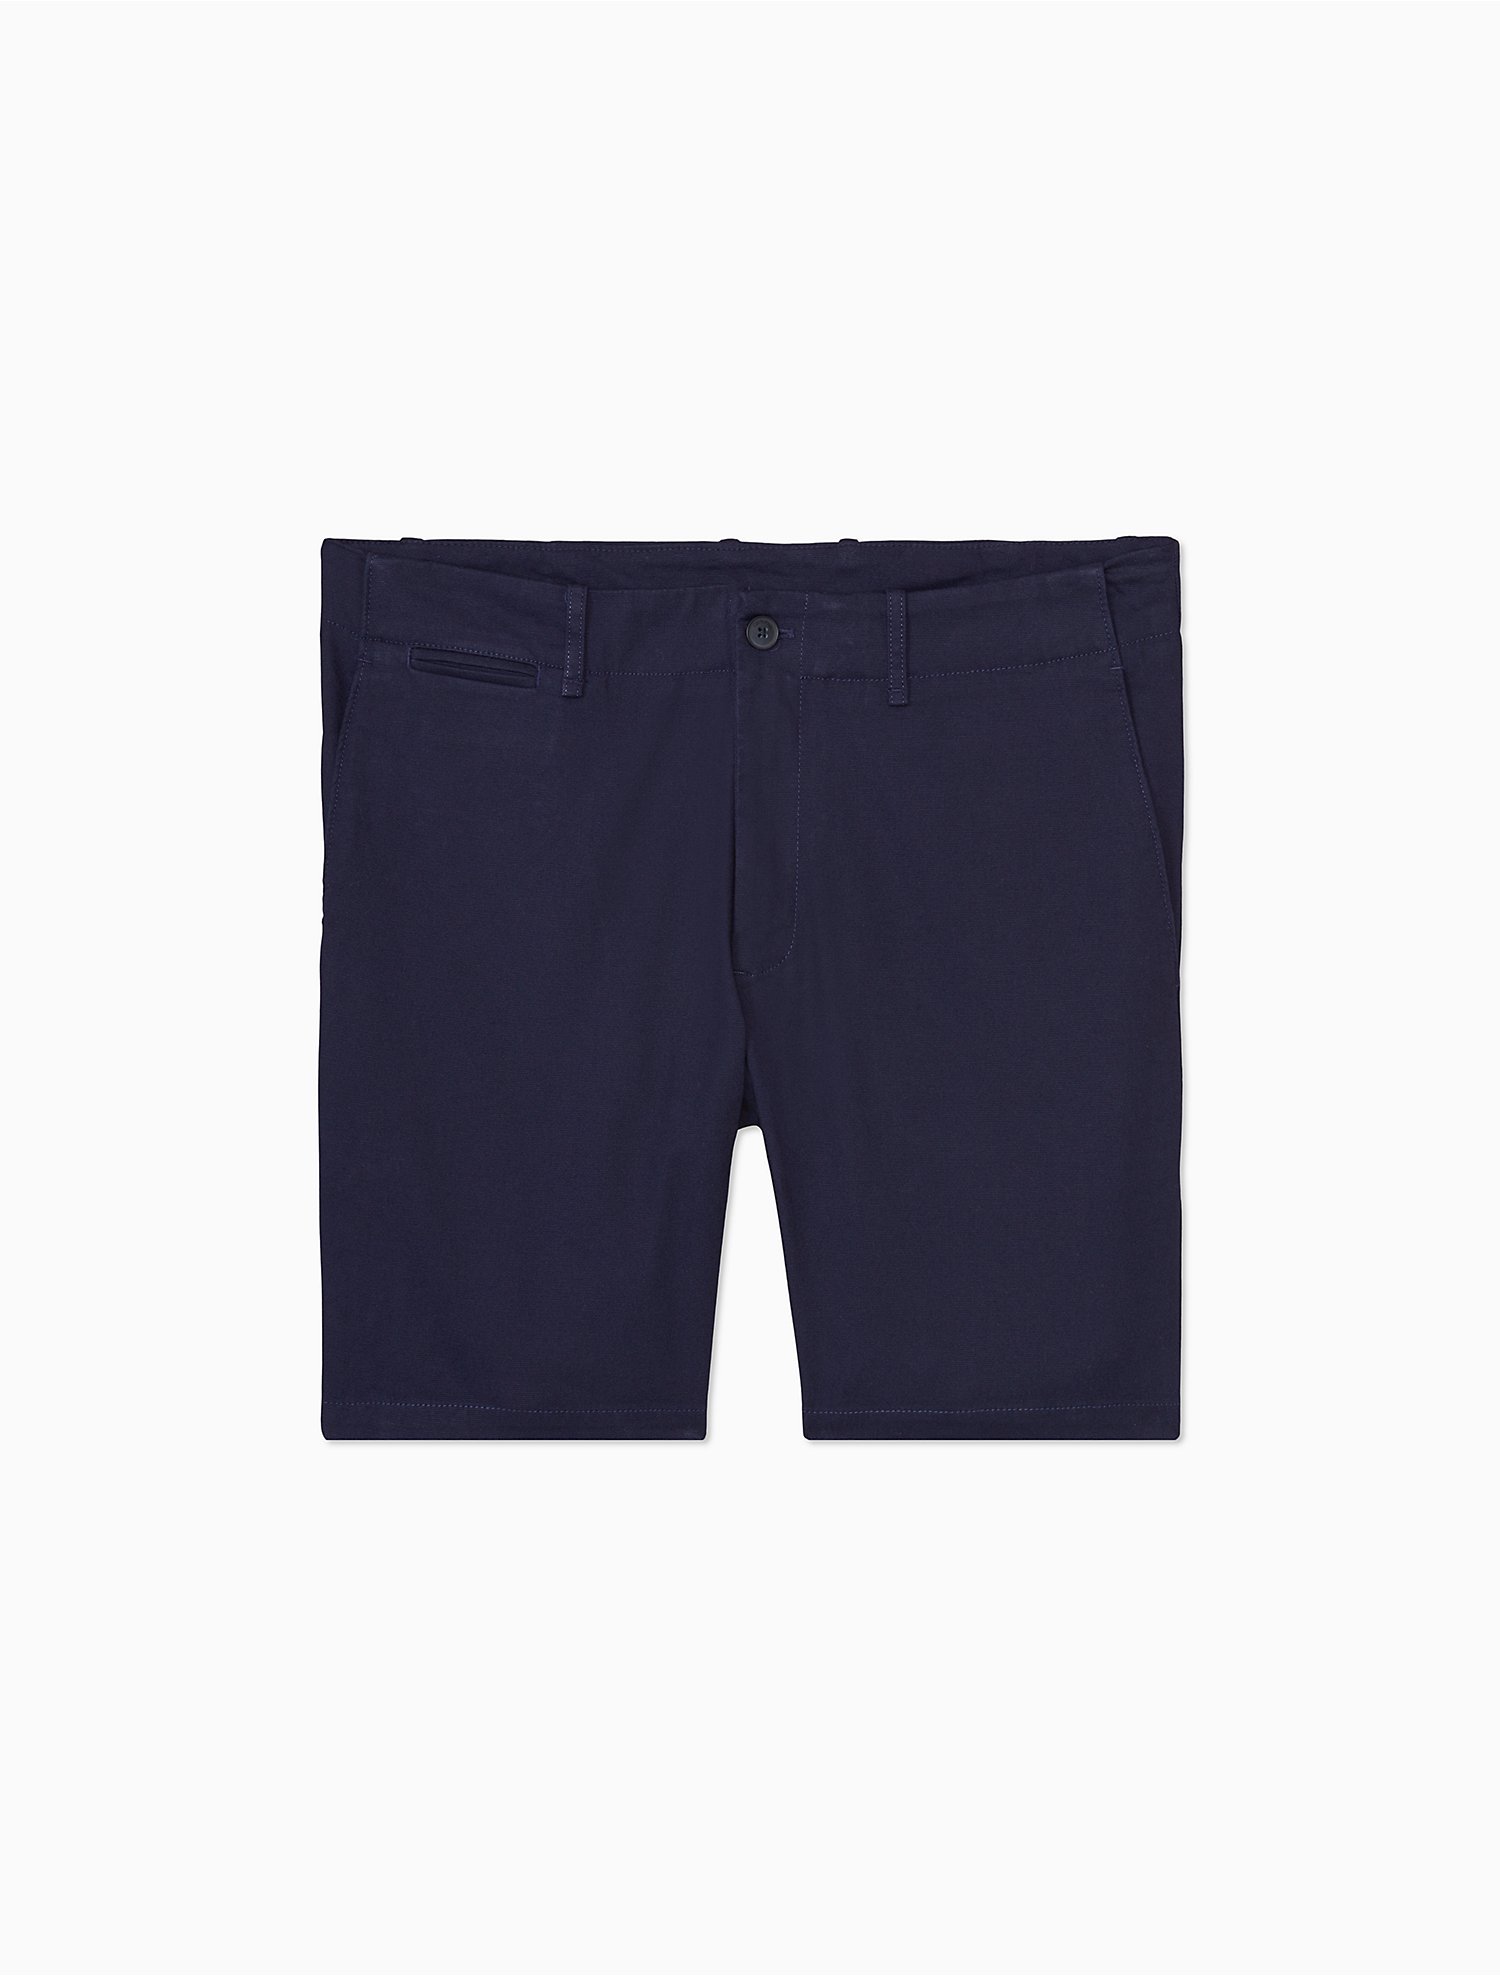 Solid Flat-Front Non-Iron Navy Shorts | Calvin Klein® USA